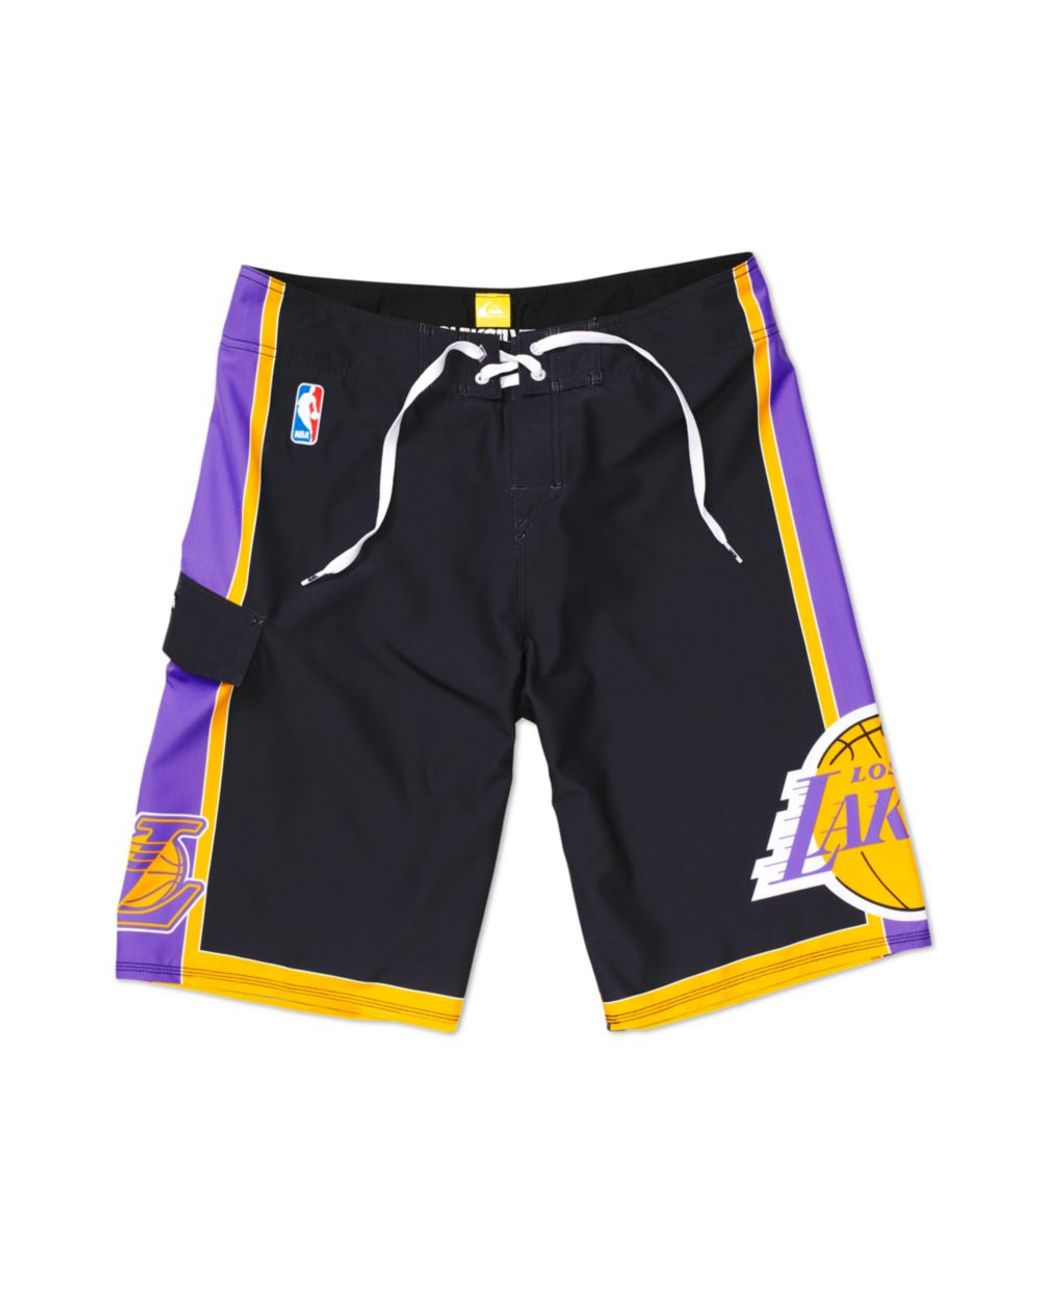 Los Angeles Lakers Mens Swim Trunks - ShopperBoard